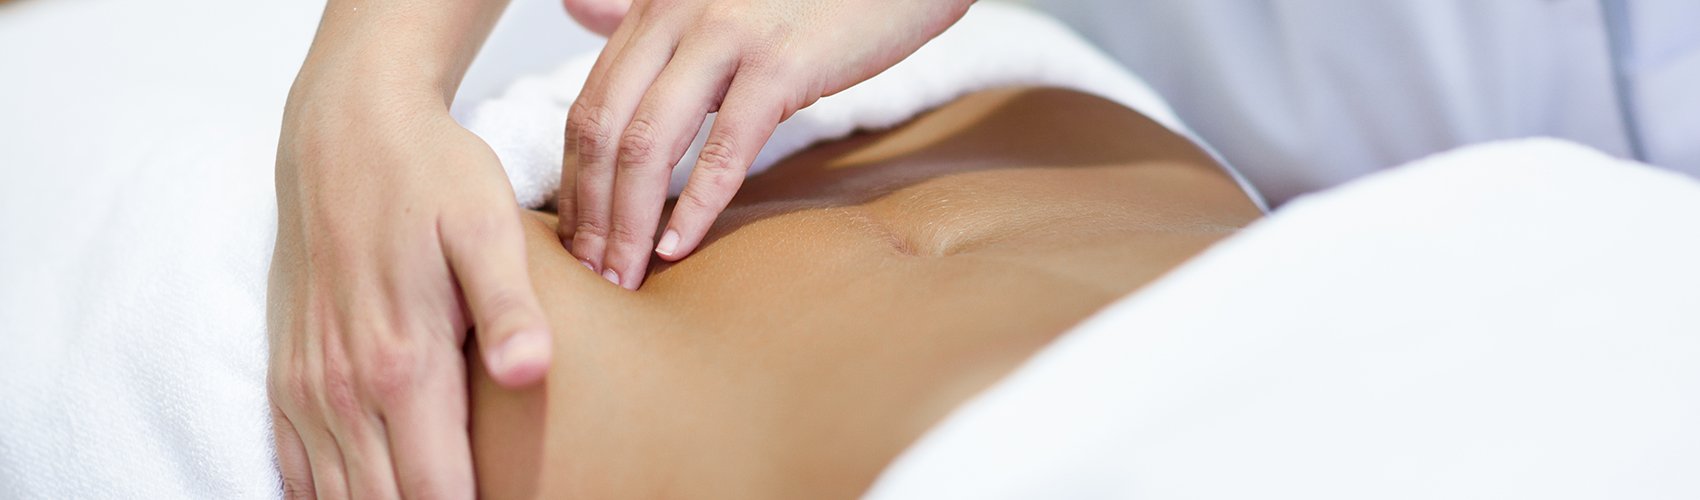 intestine massage at Yinyang Connection Spa